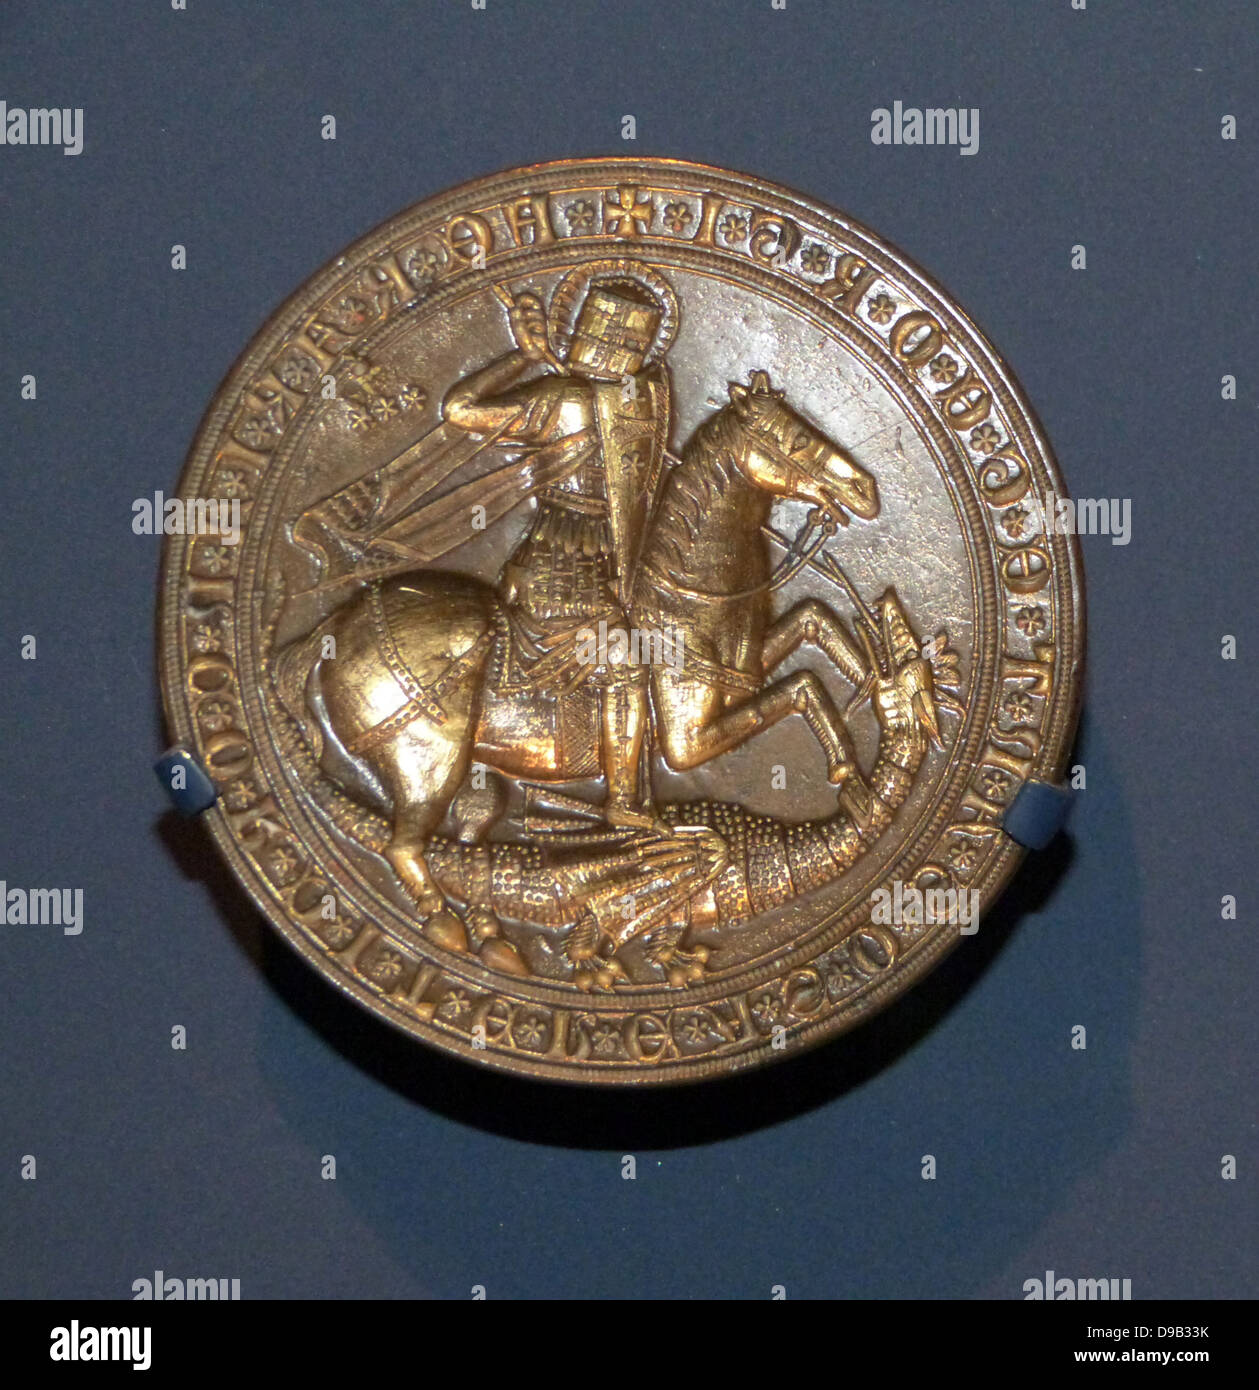 Seal matrix of Alberto d'Este about 1388-93. Gilded copper alloy with modern seal impression. Italy, Ferrara. Stock Photo